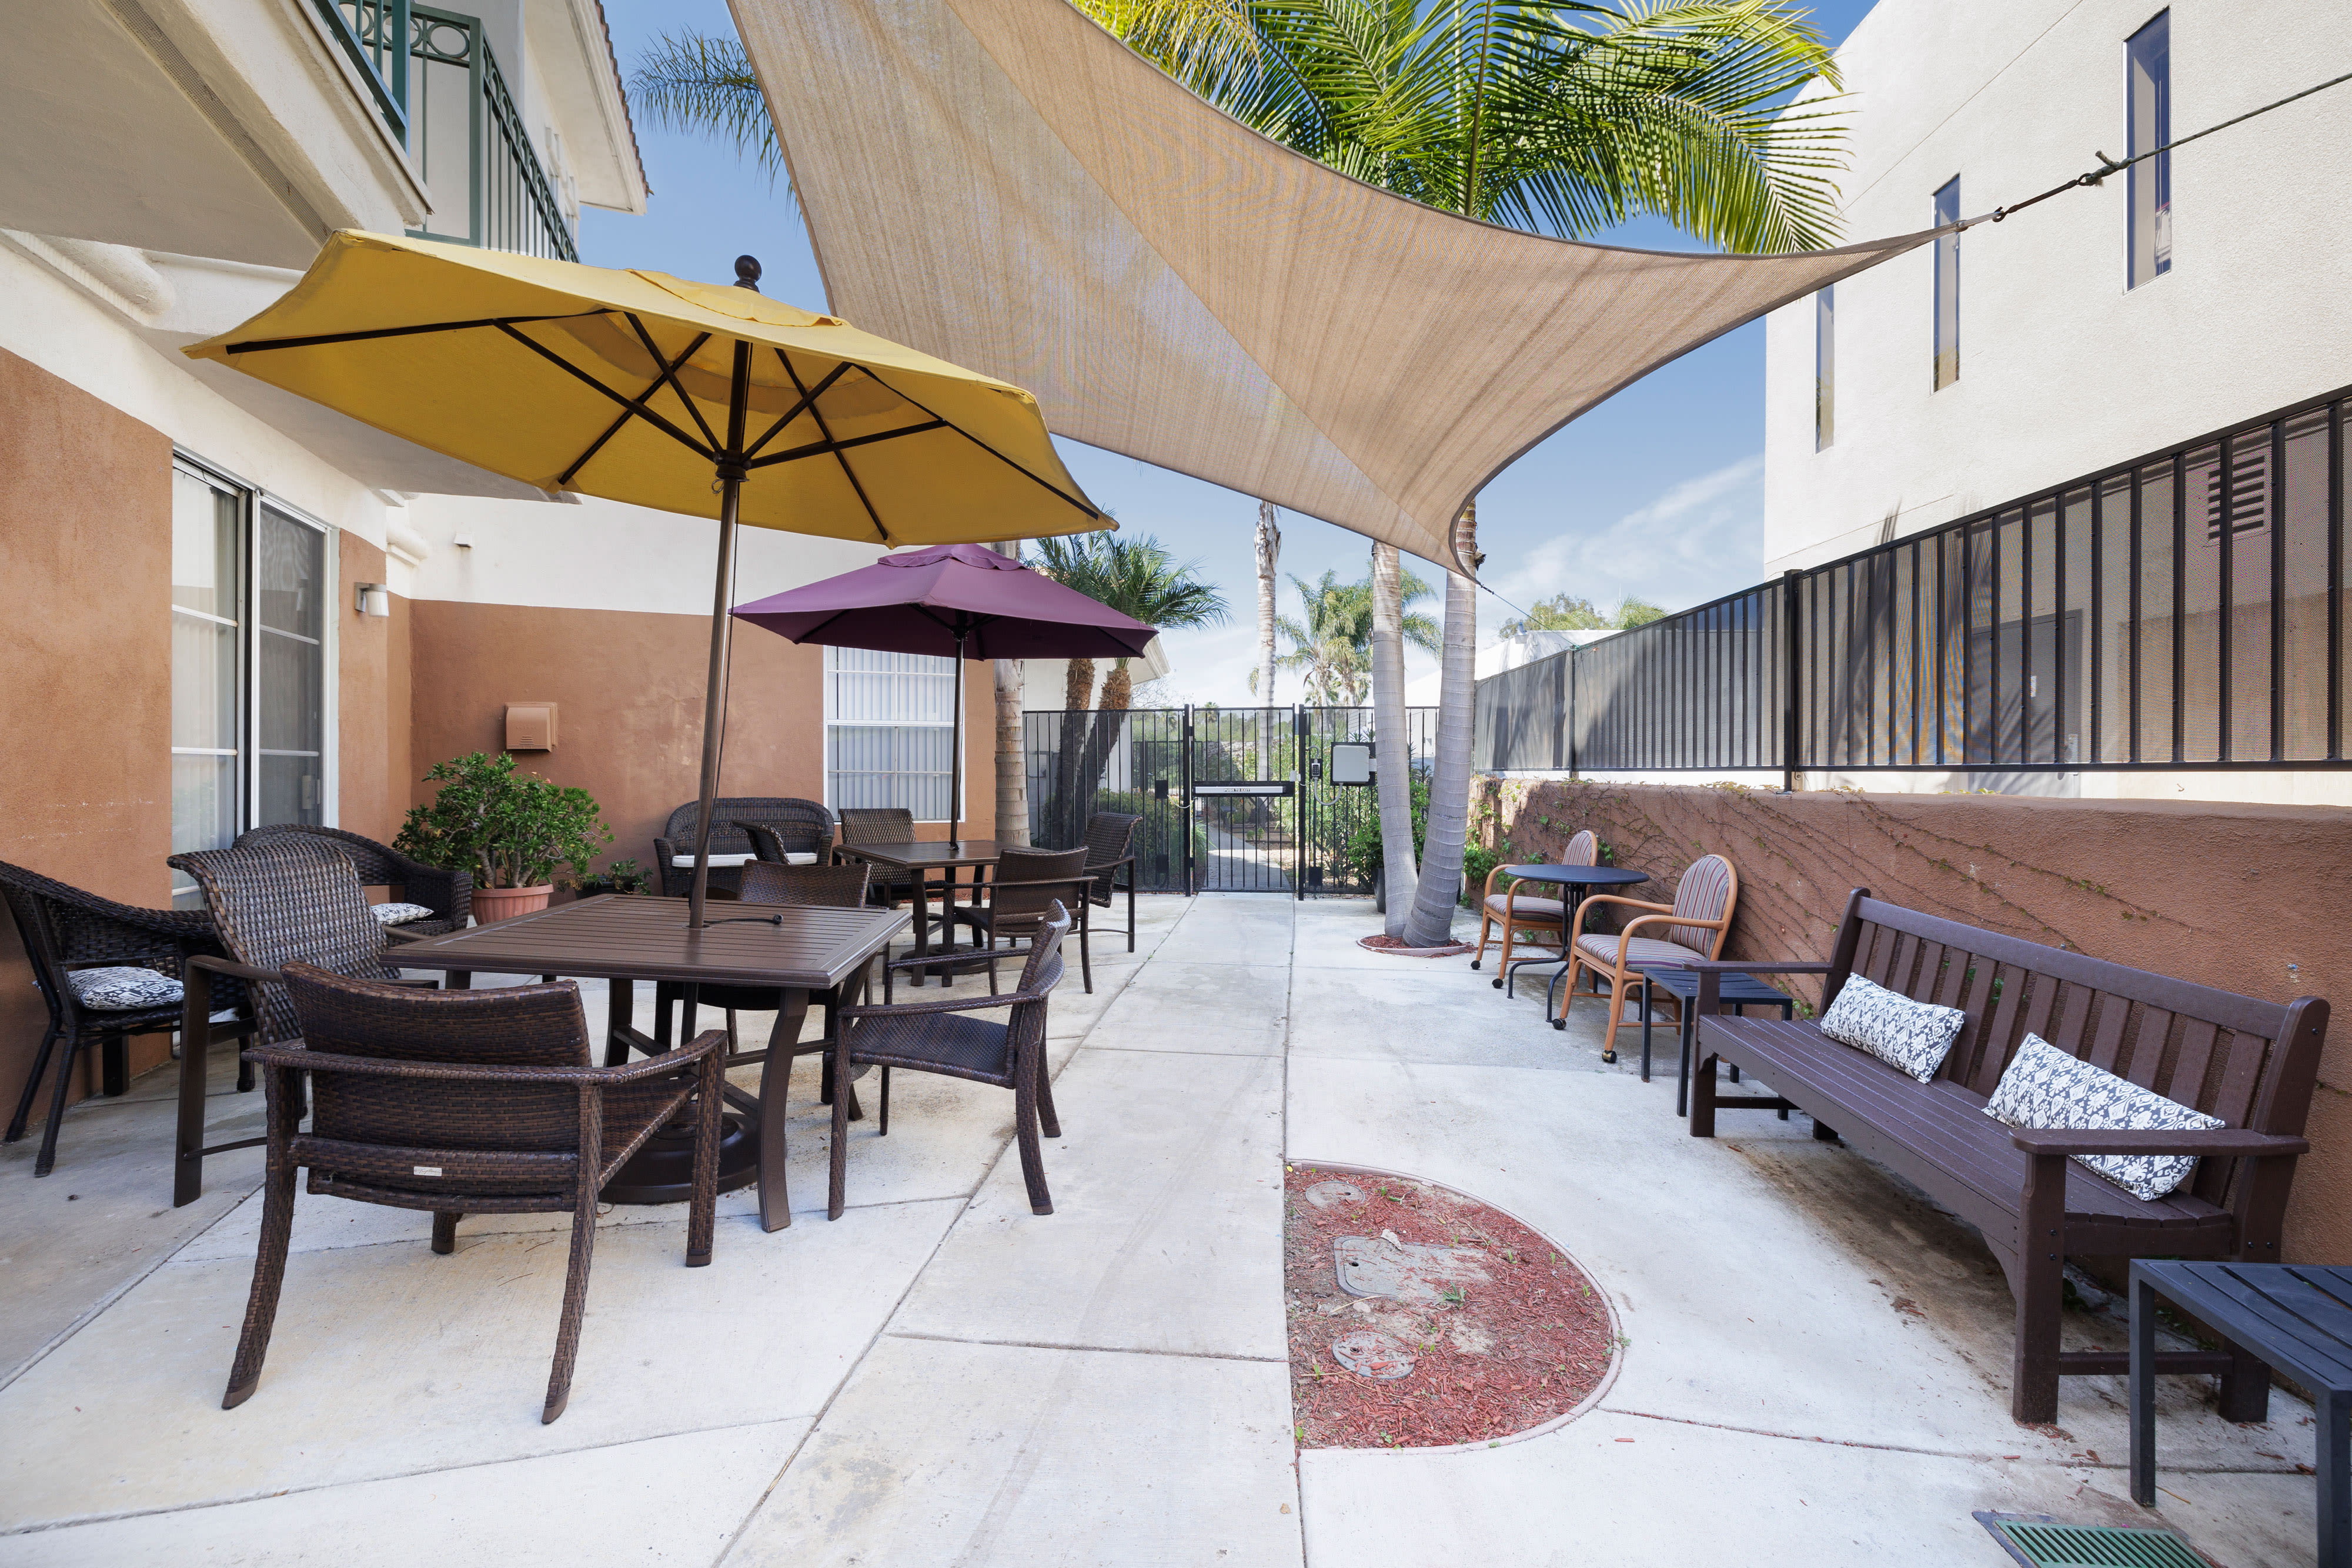 Outdoor lounge area at Pacifica Senior Living Bonita in Chula Vista, California